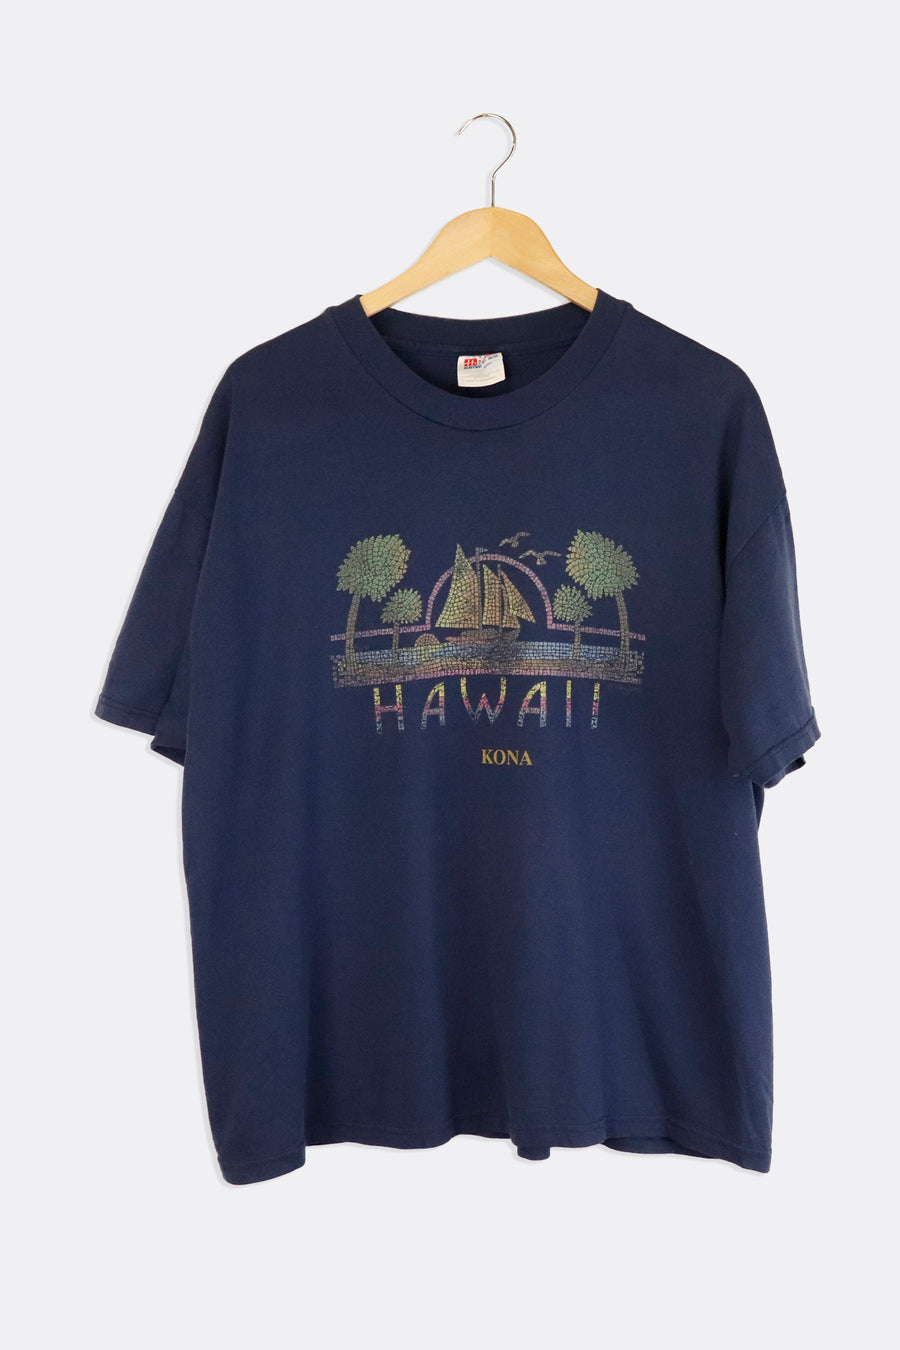 Vintage Hawaii Palm Trees Sailboat Graphic T Shirt Sz XL